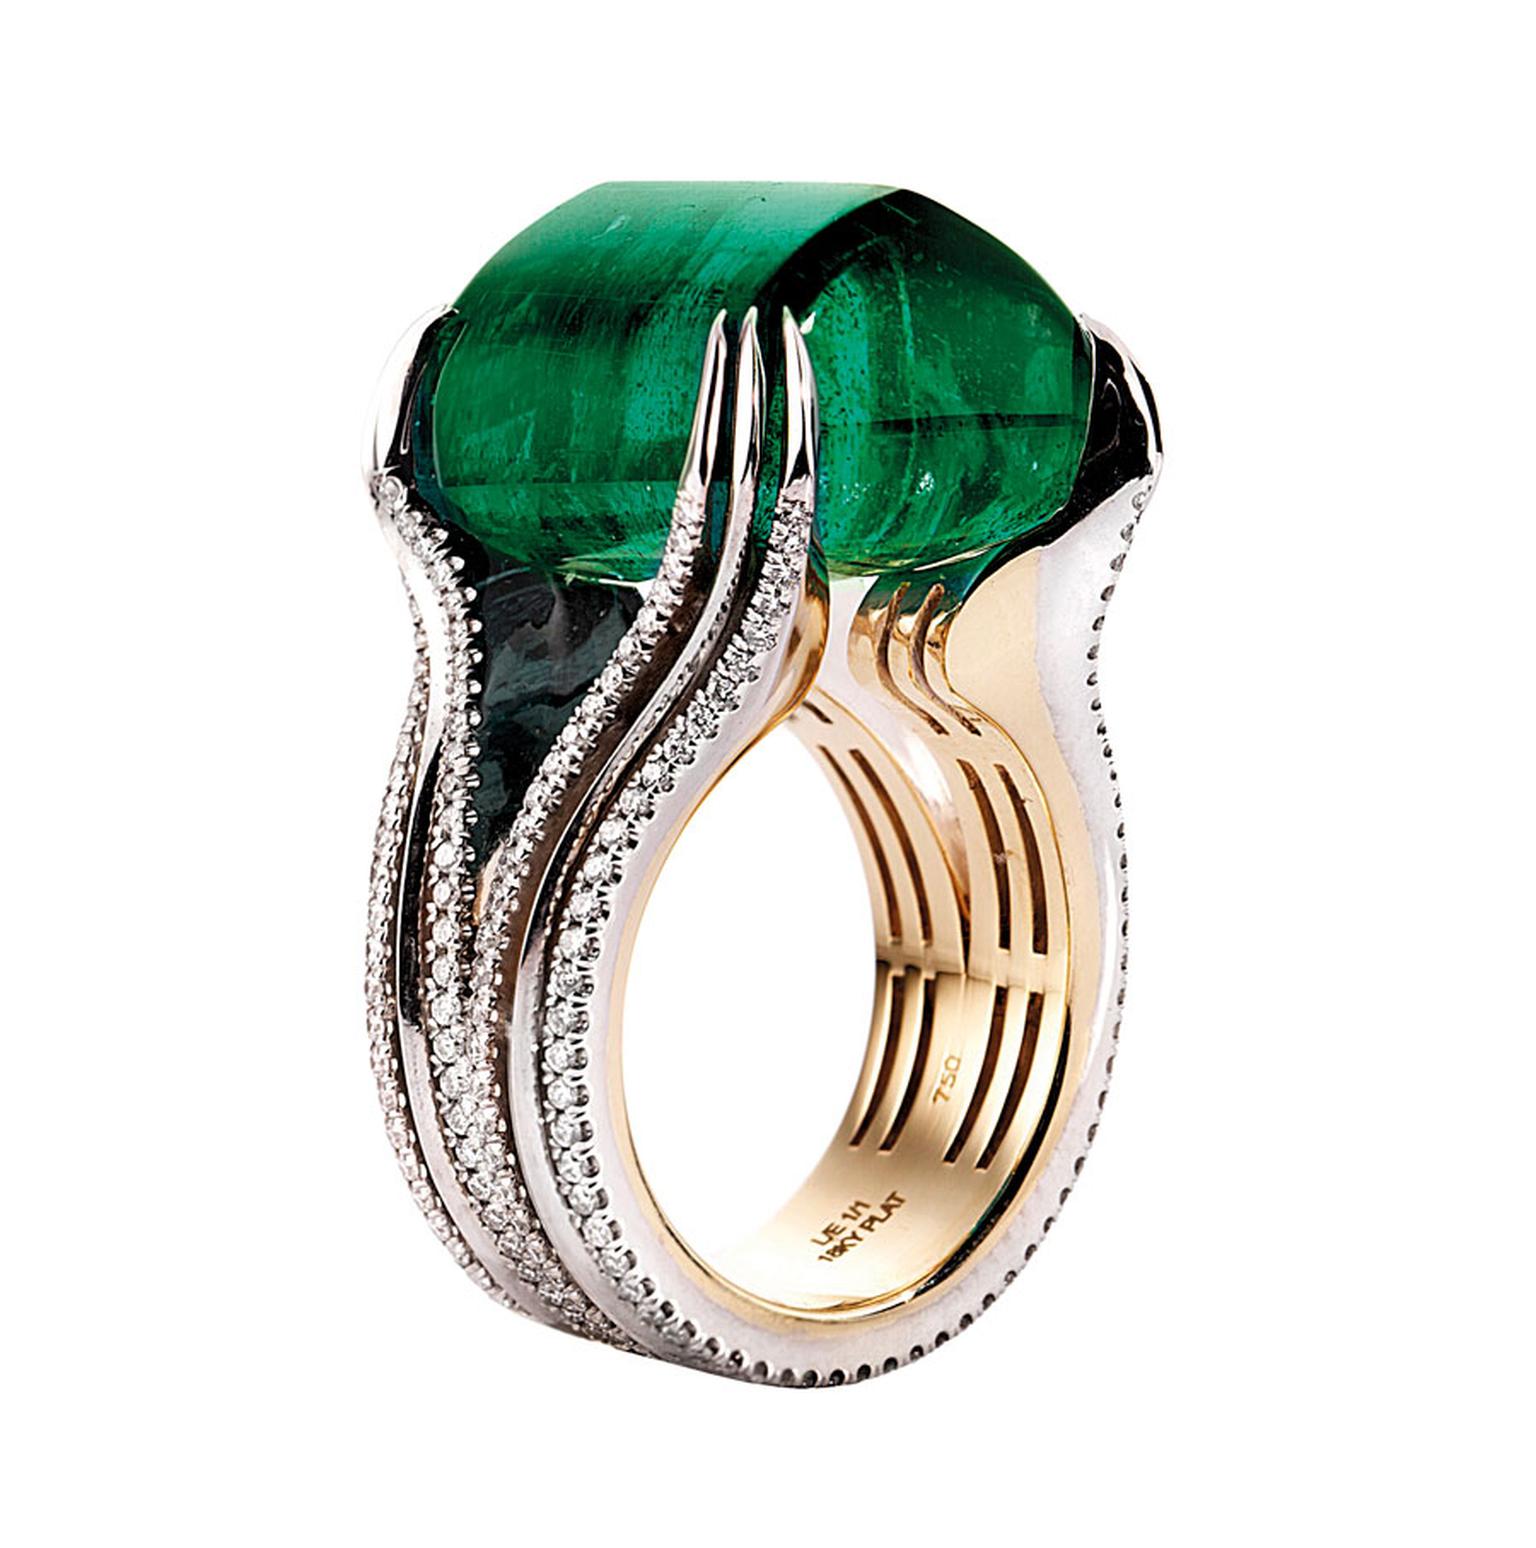 Gemfields-Alexandra-Mor-ring-with-Gemfields-Emerald-130222-CMYK.jpg